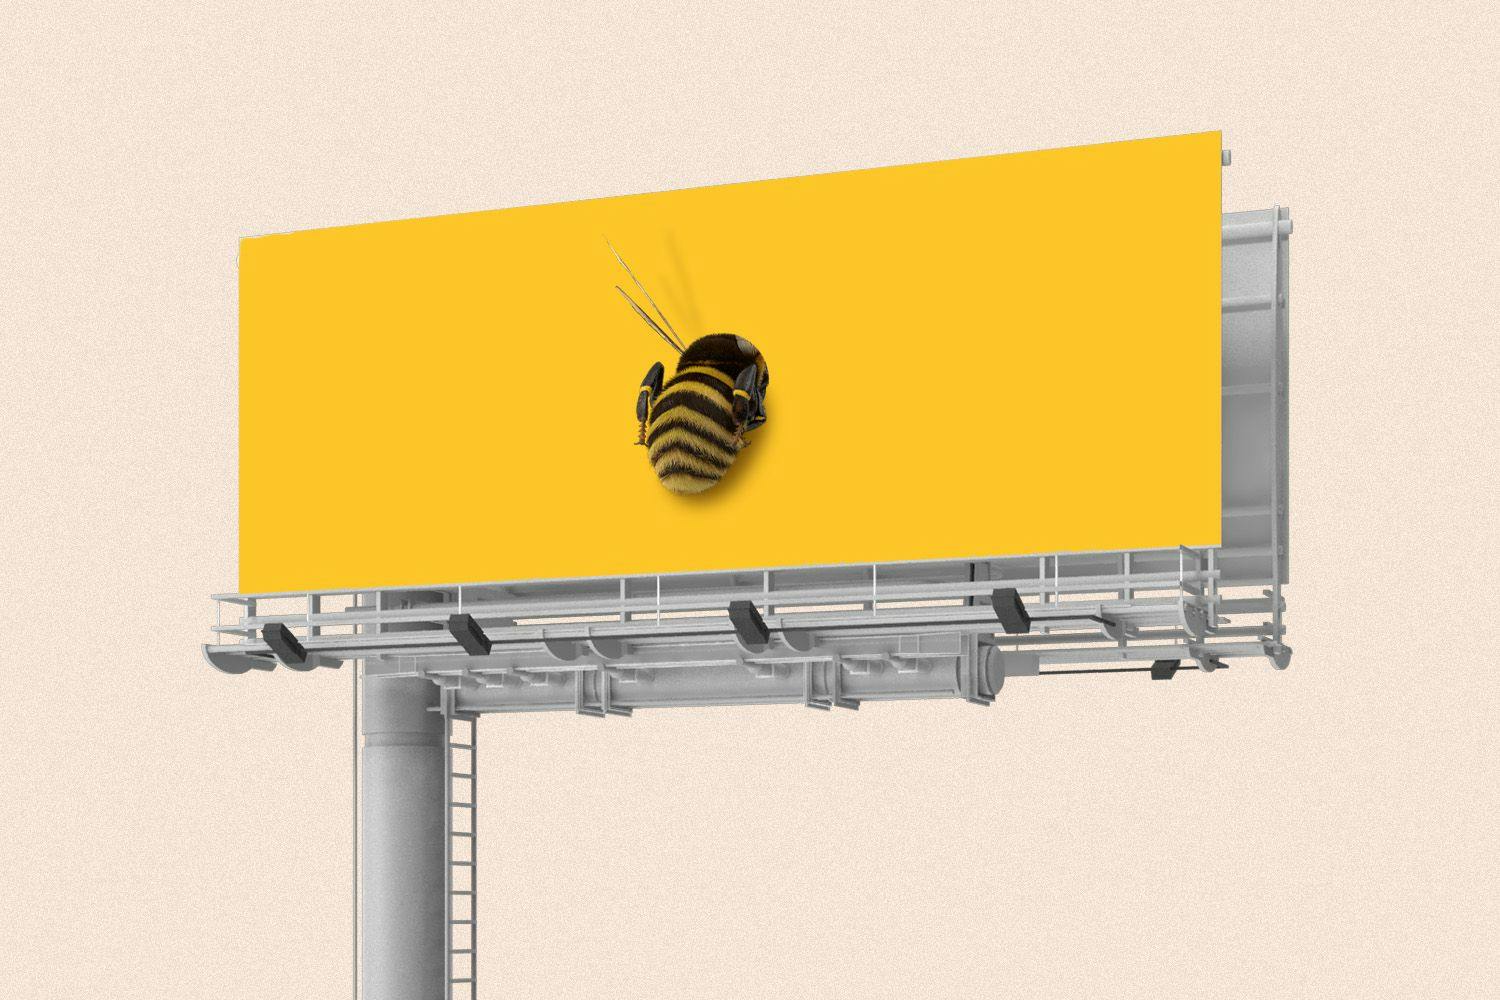 Large bumble bee stuck on yellow billboard